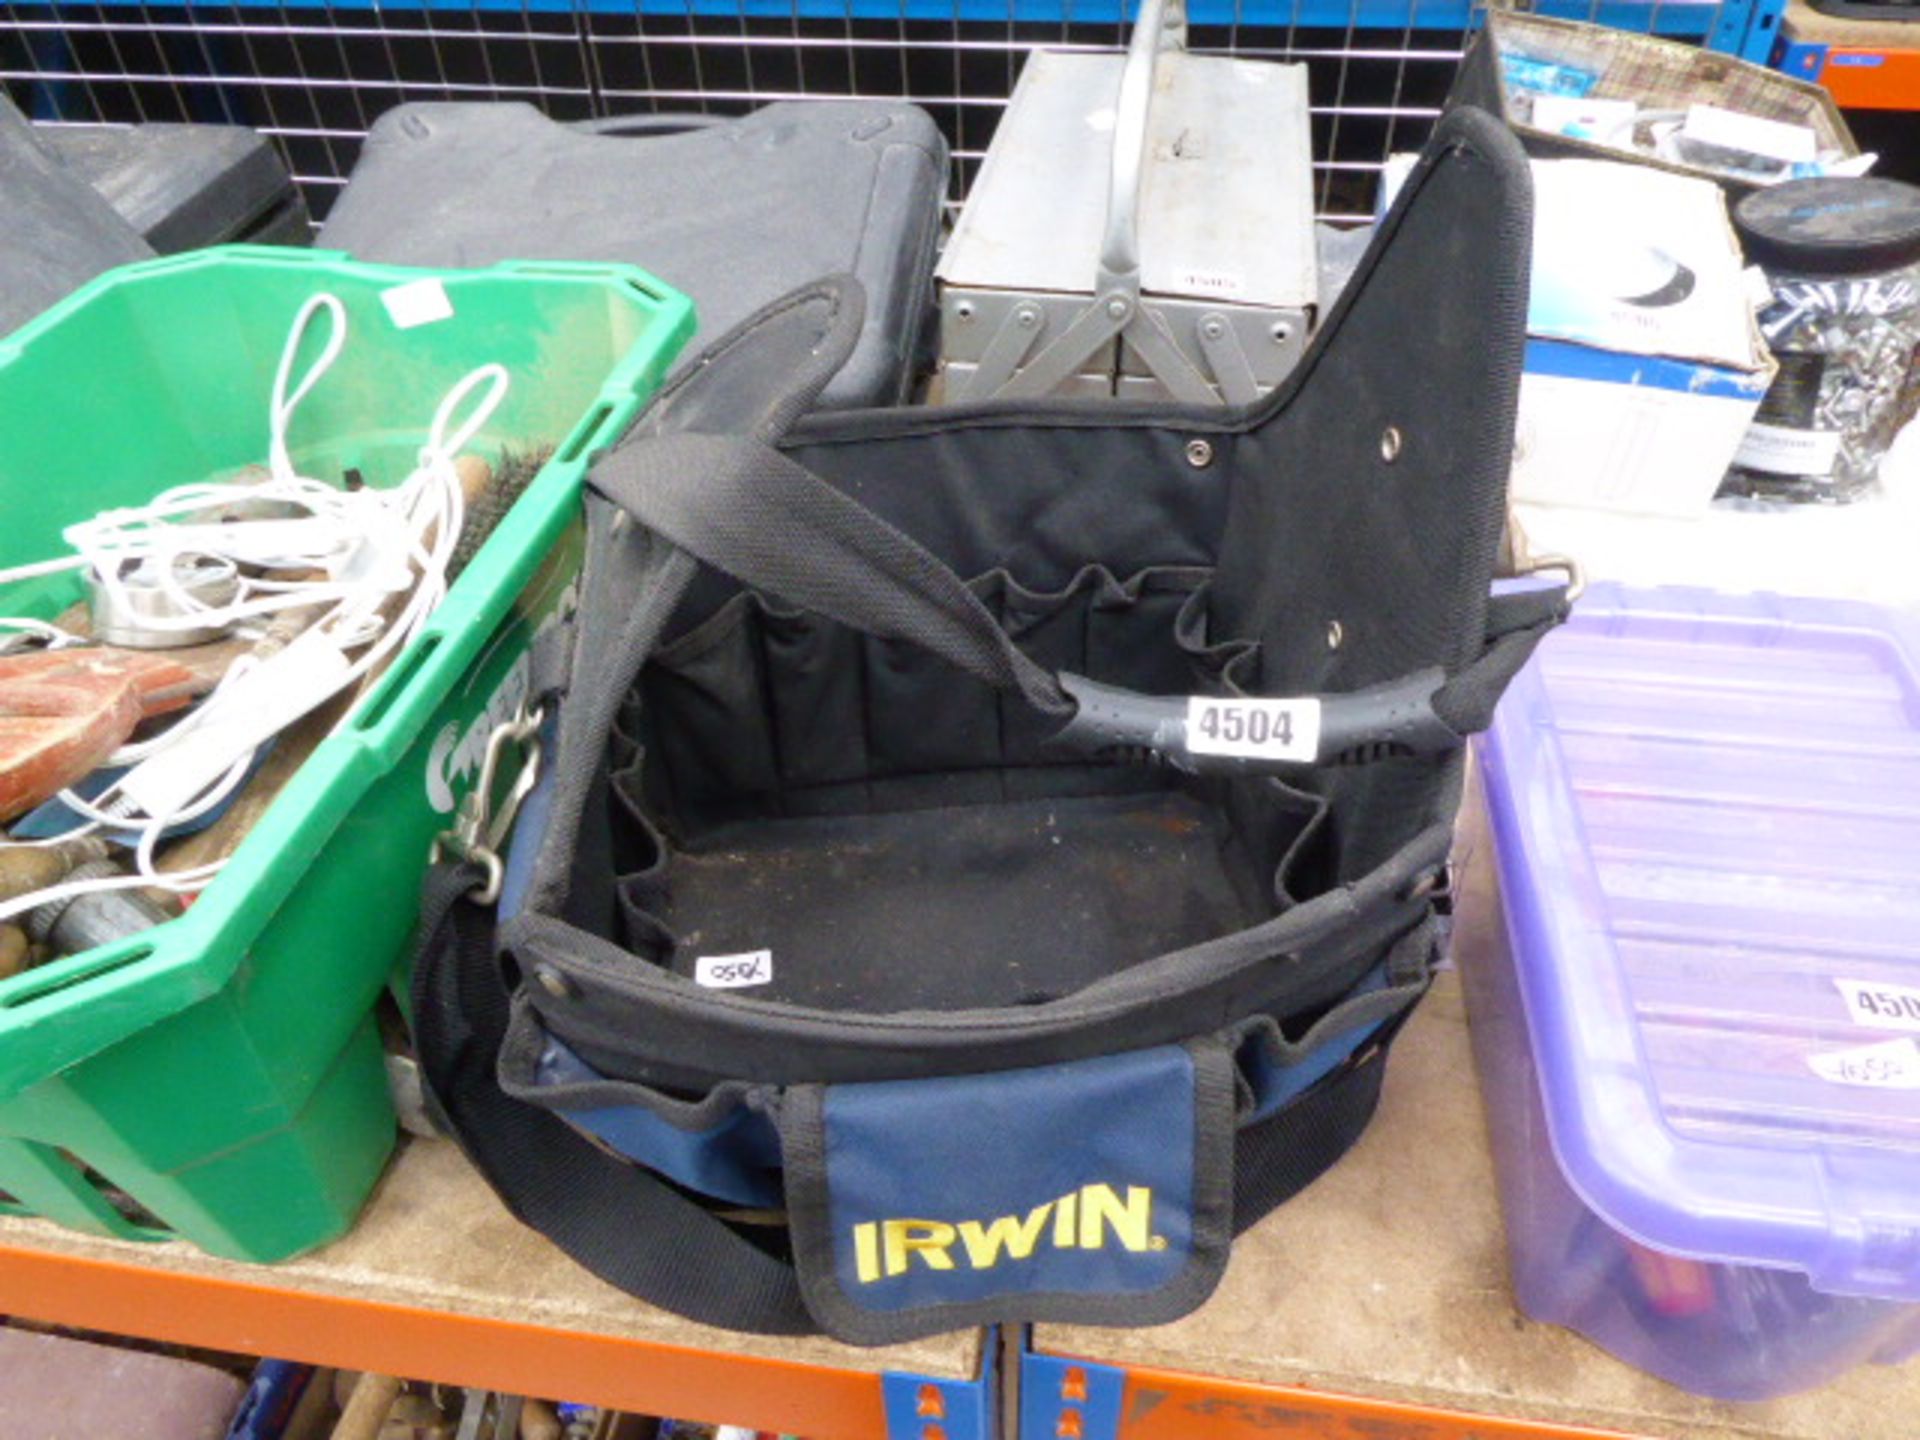 Irwin workman's toolbag